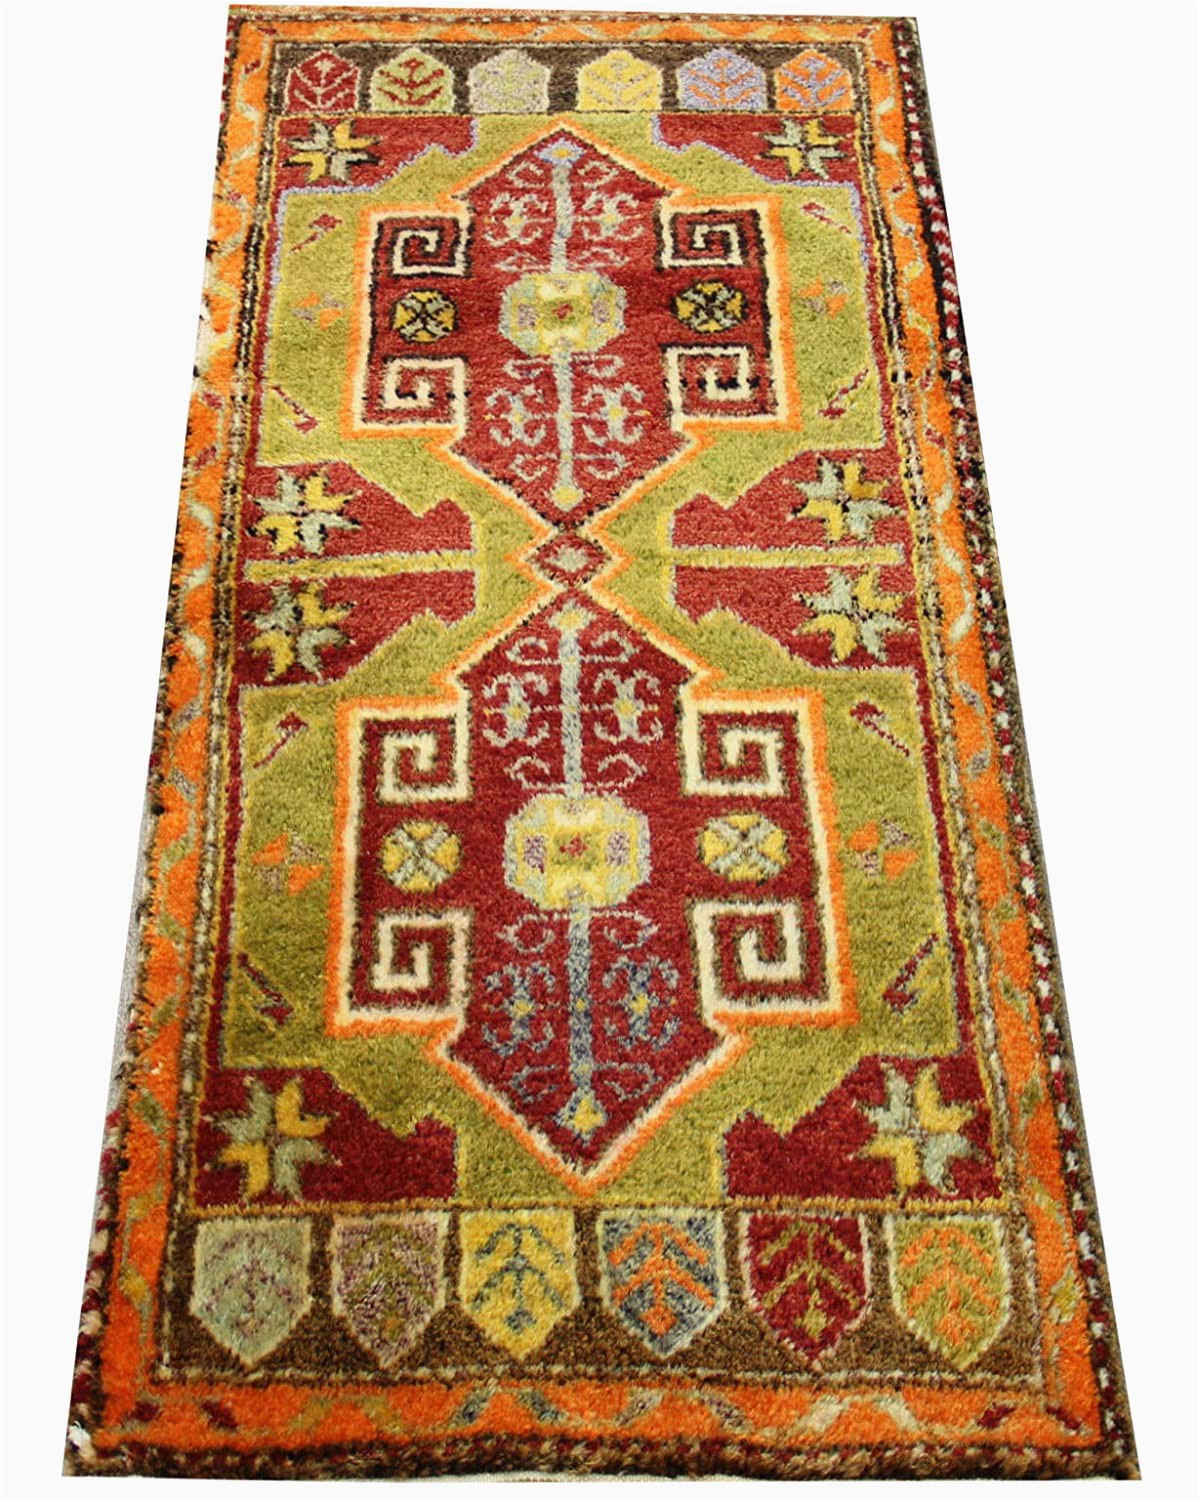 Area Rugs Made In Turkey Amazon Handmade Vintage Doormat Small Rug 3 4×1 7 Feet